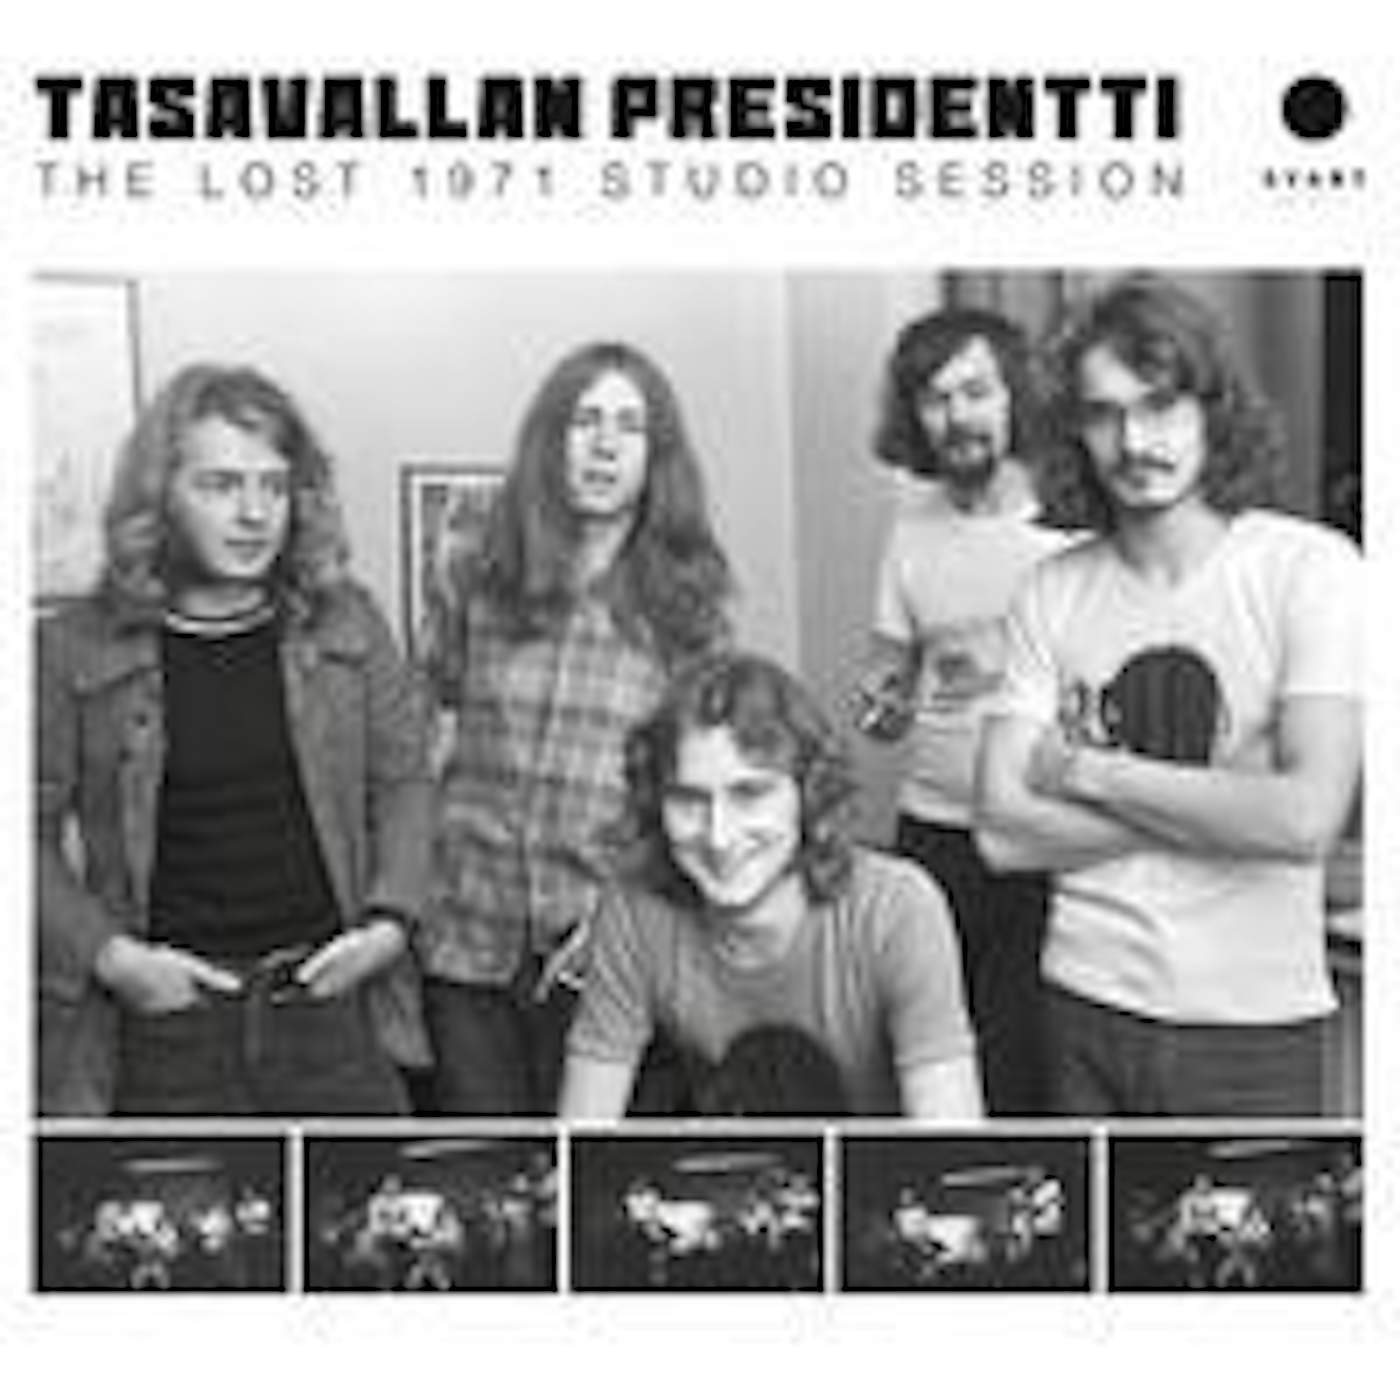 Tasavallan Presidentti LOST 1971 STUDIO SESSION Vinyl Record